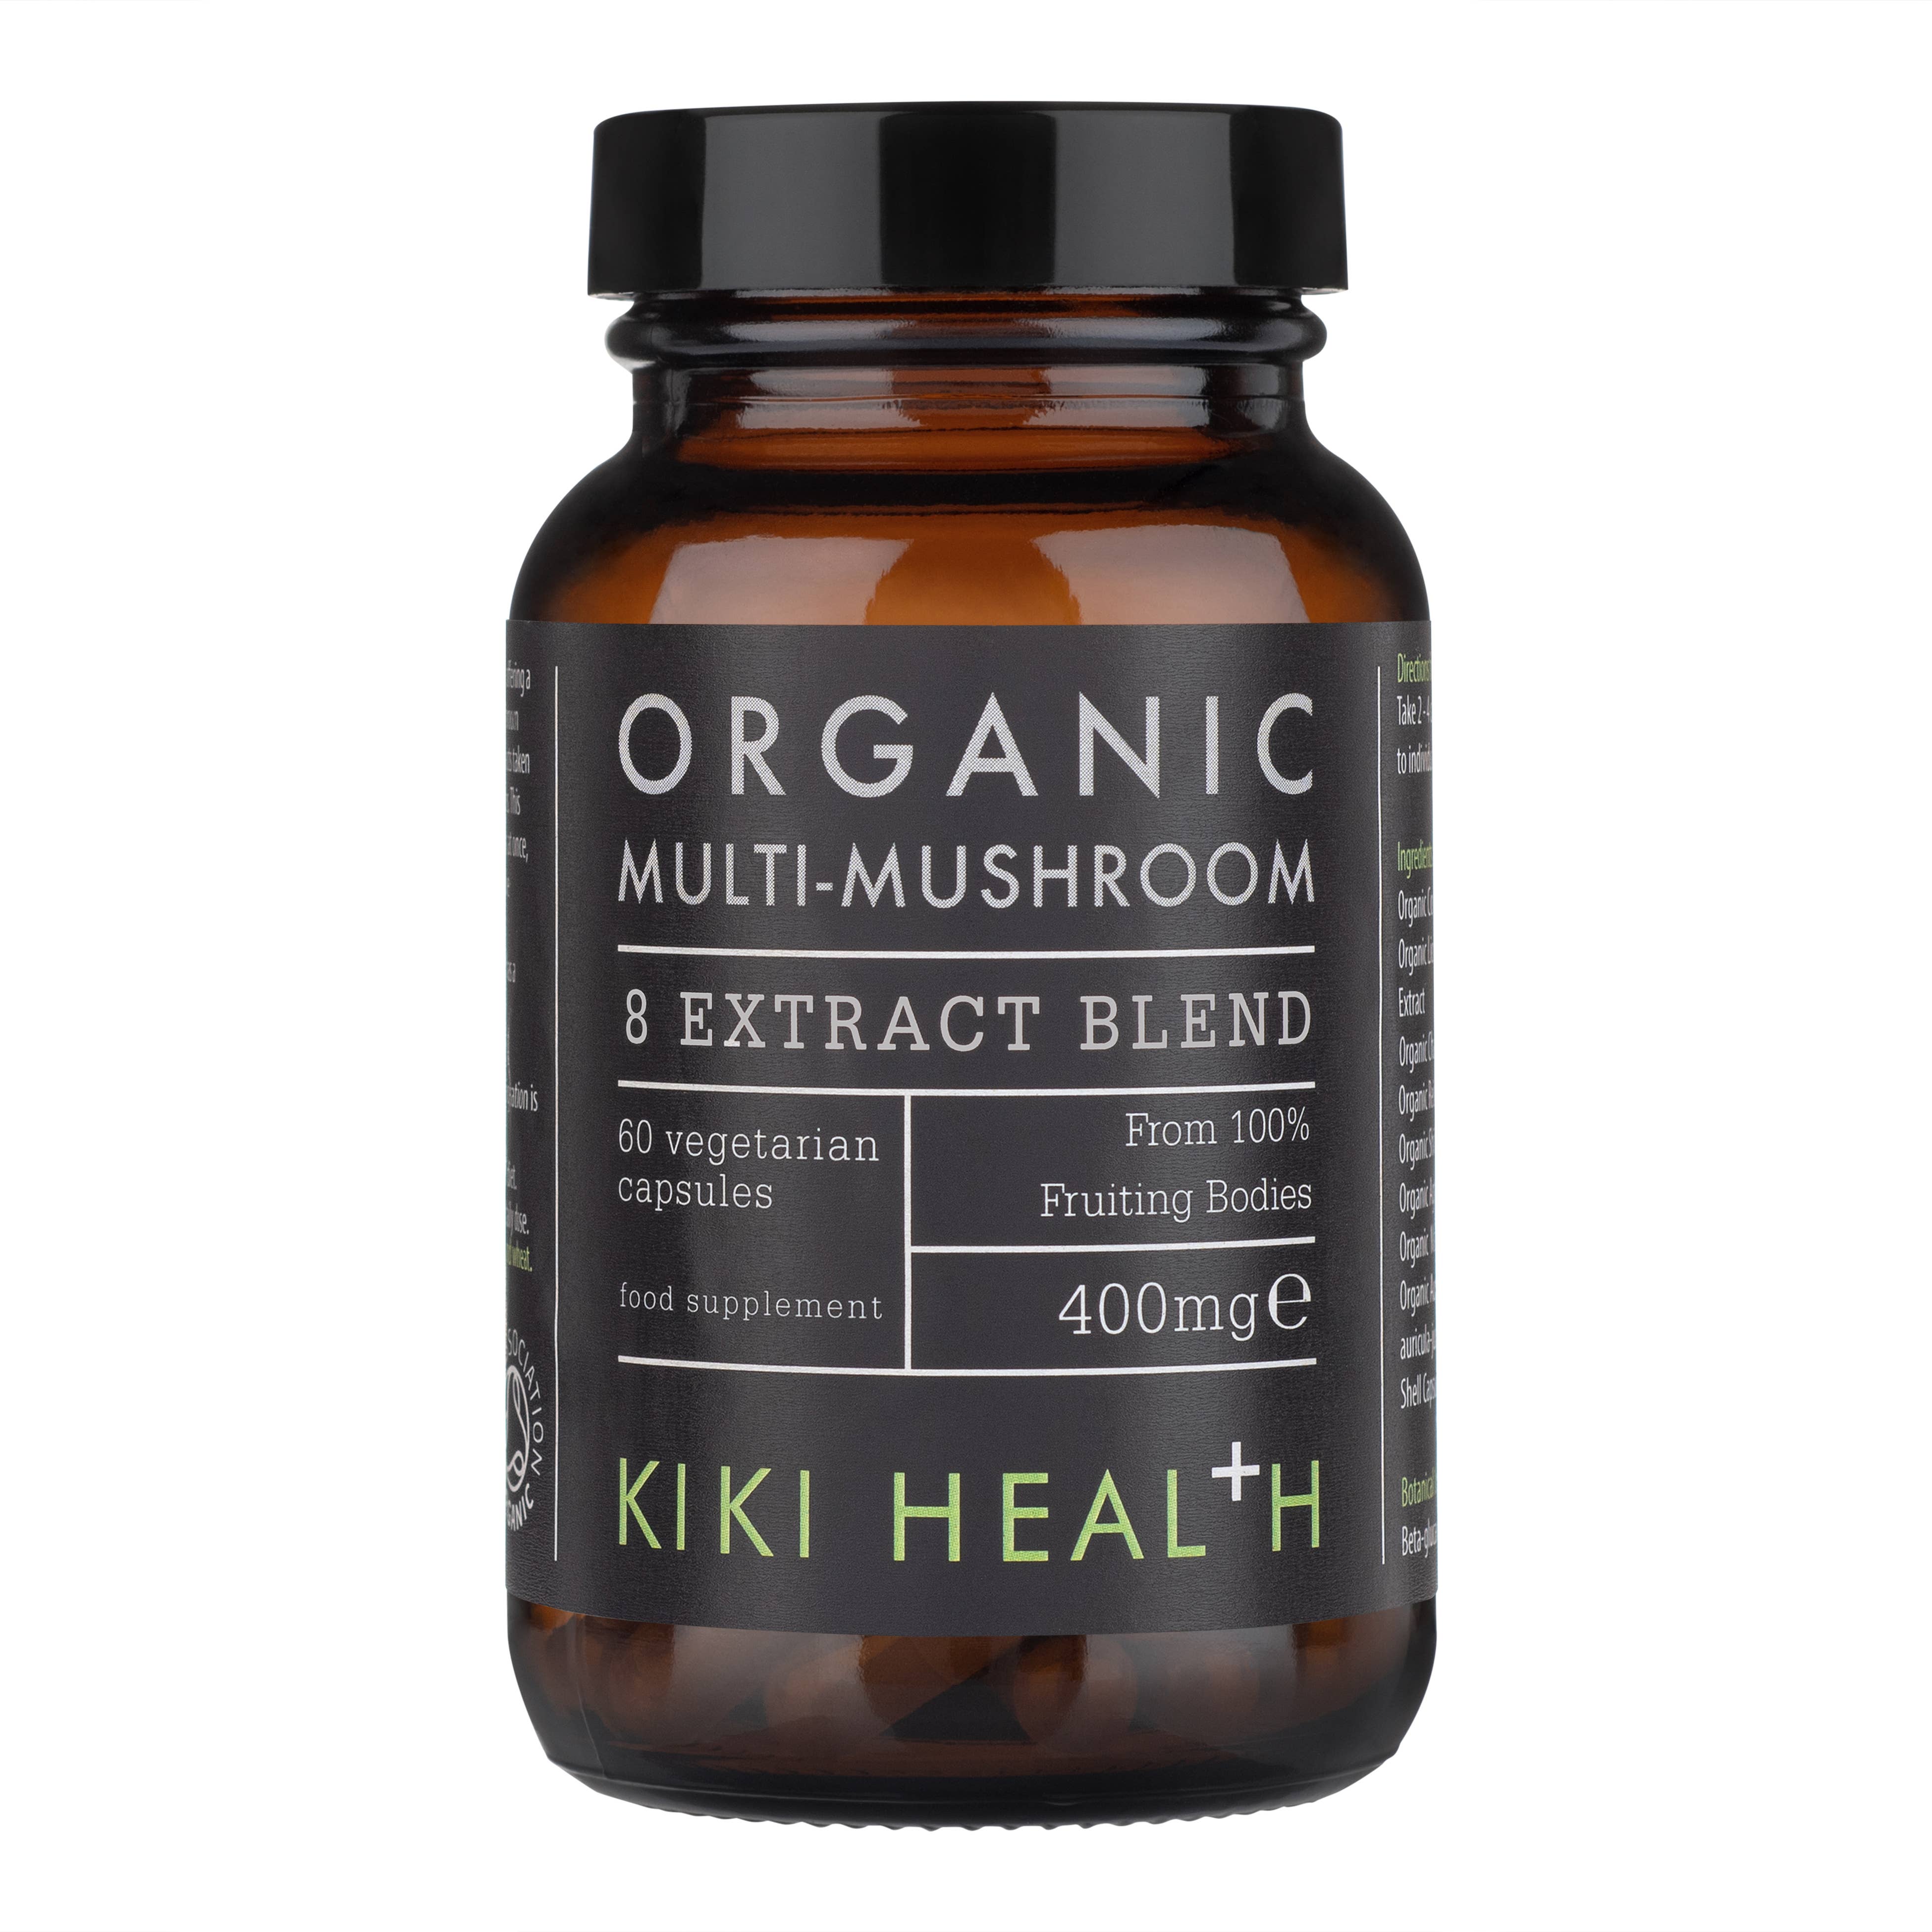 Kiki Health Organic 8 Mushroom Extract Blend - 60 Vegicaps